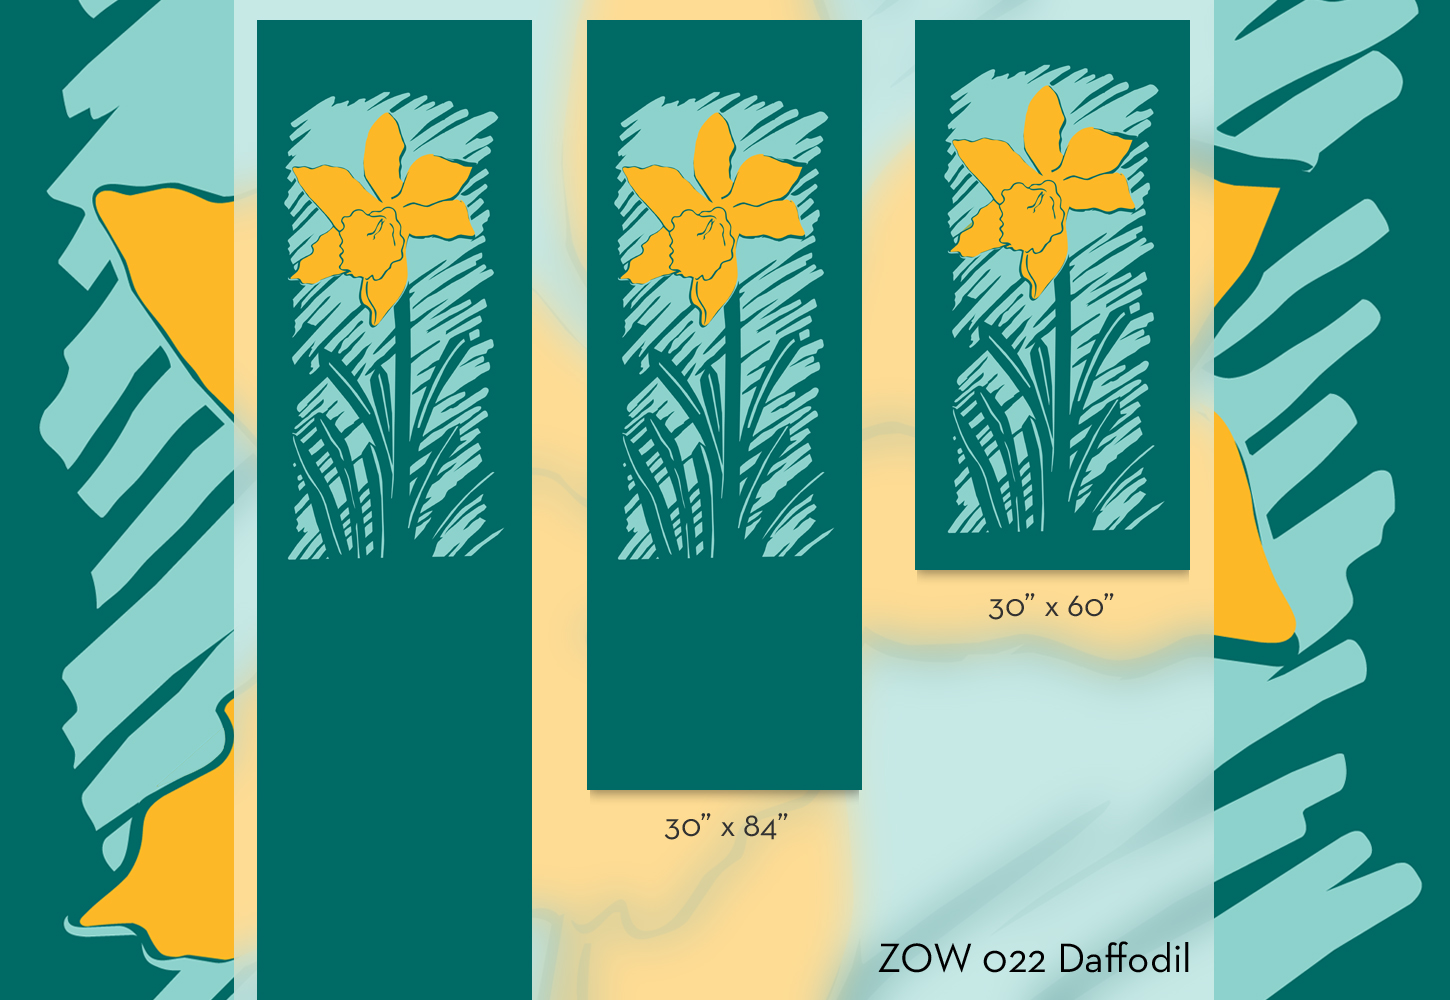 ZOW 022 Daffodil